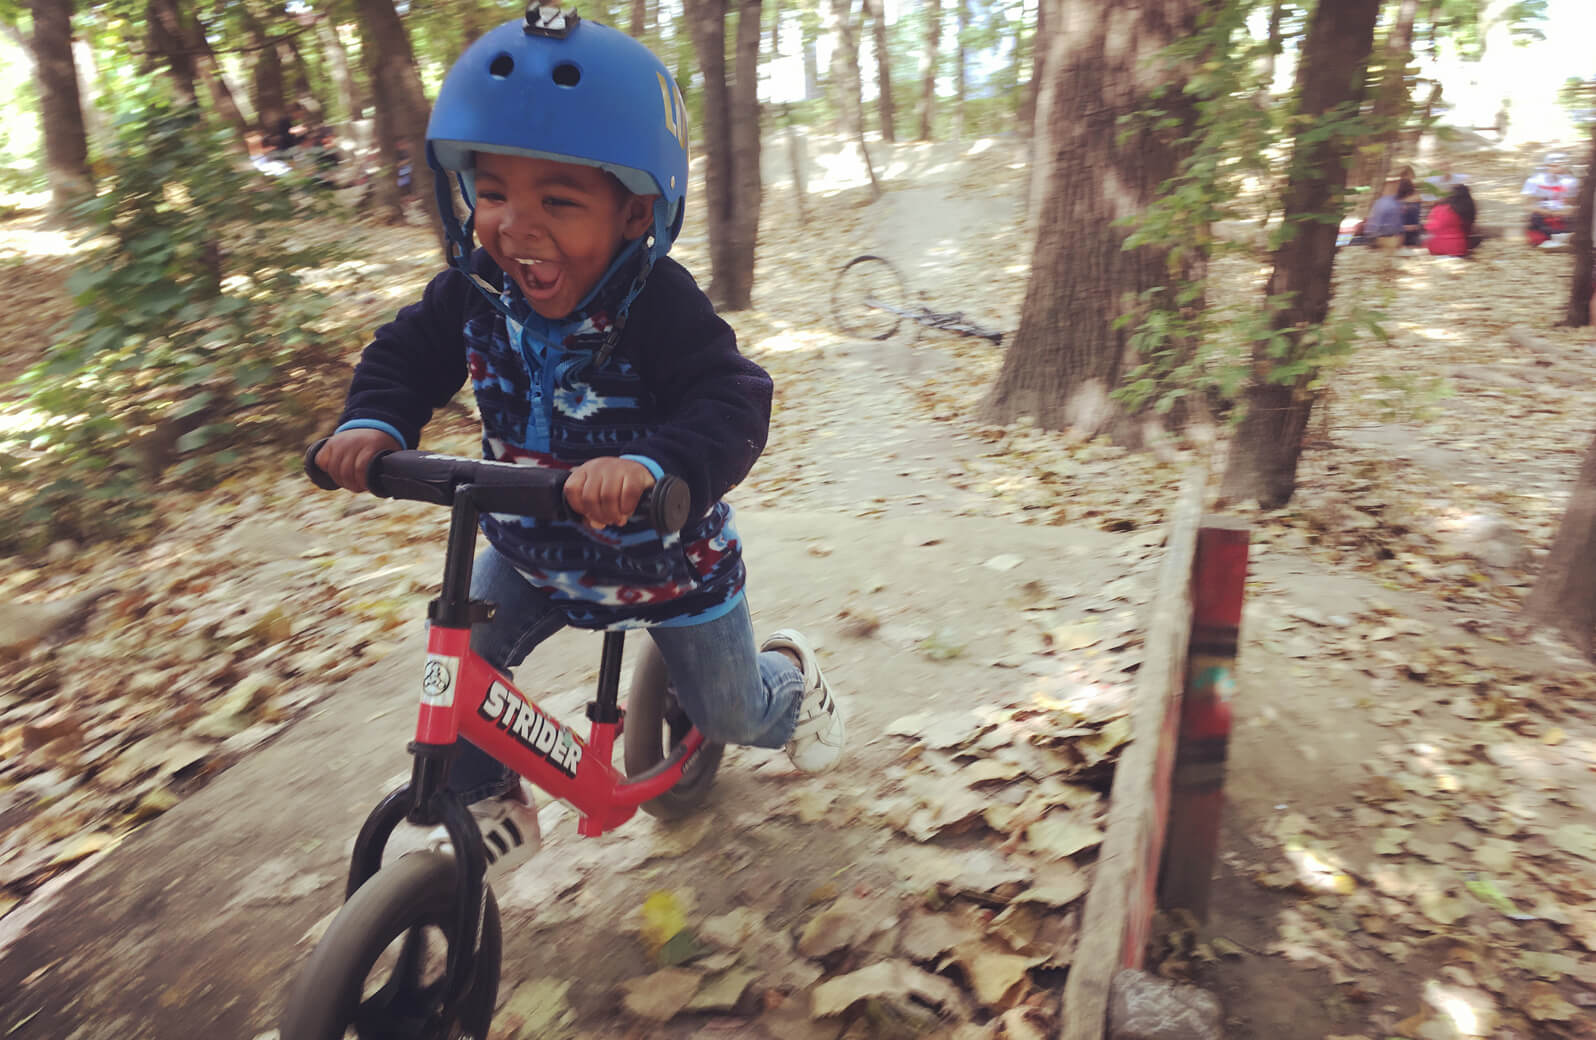 strider balance bike for 2 year old